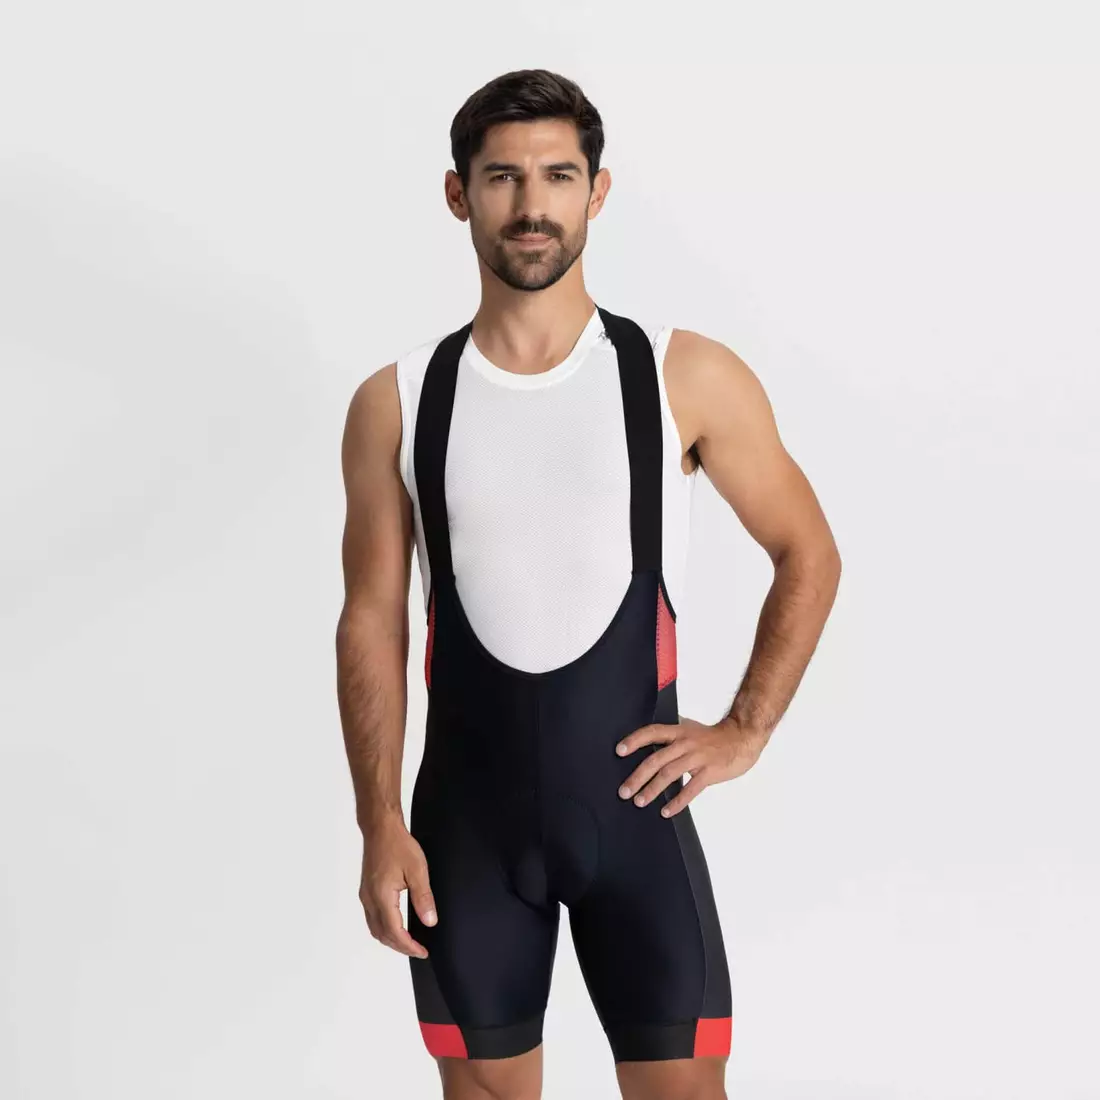 Rogelli FUSE II mens cycling bib shorts, black and red